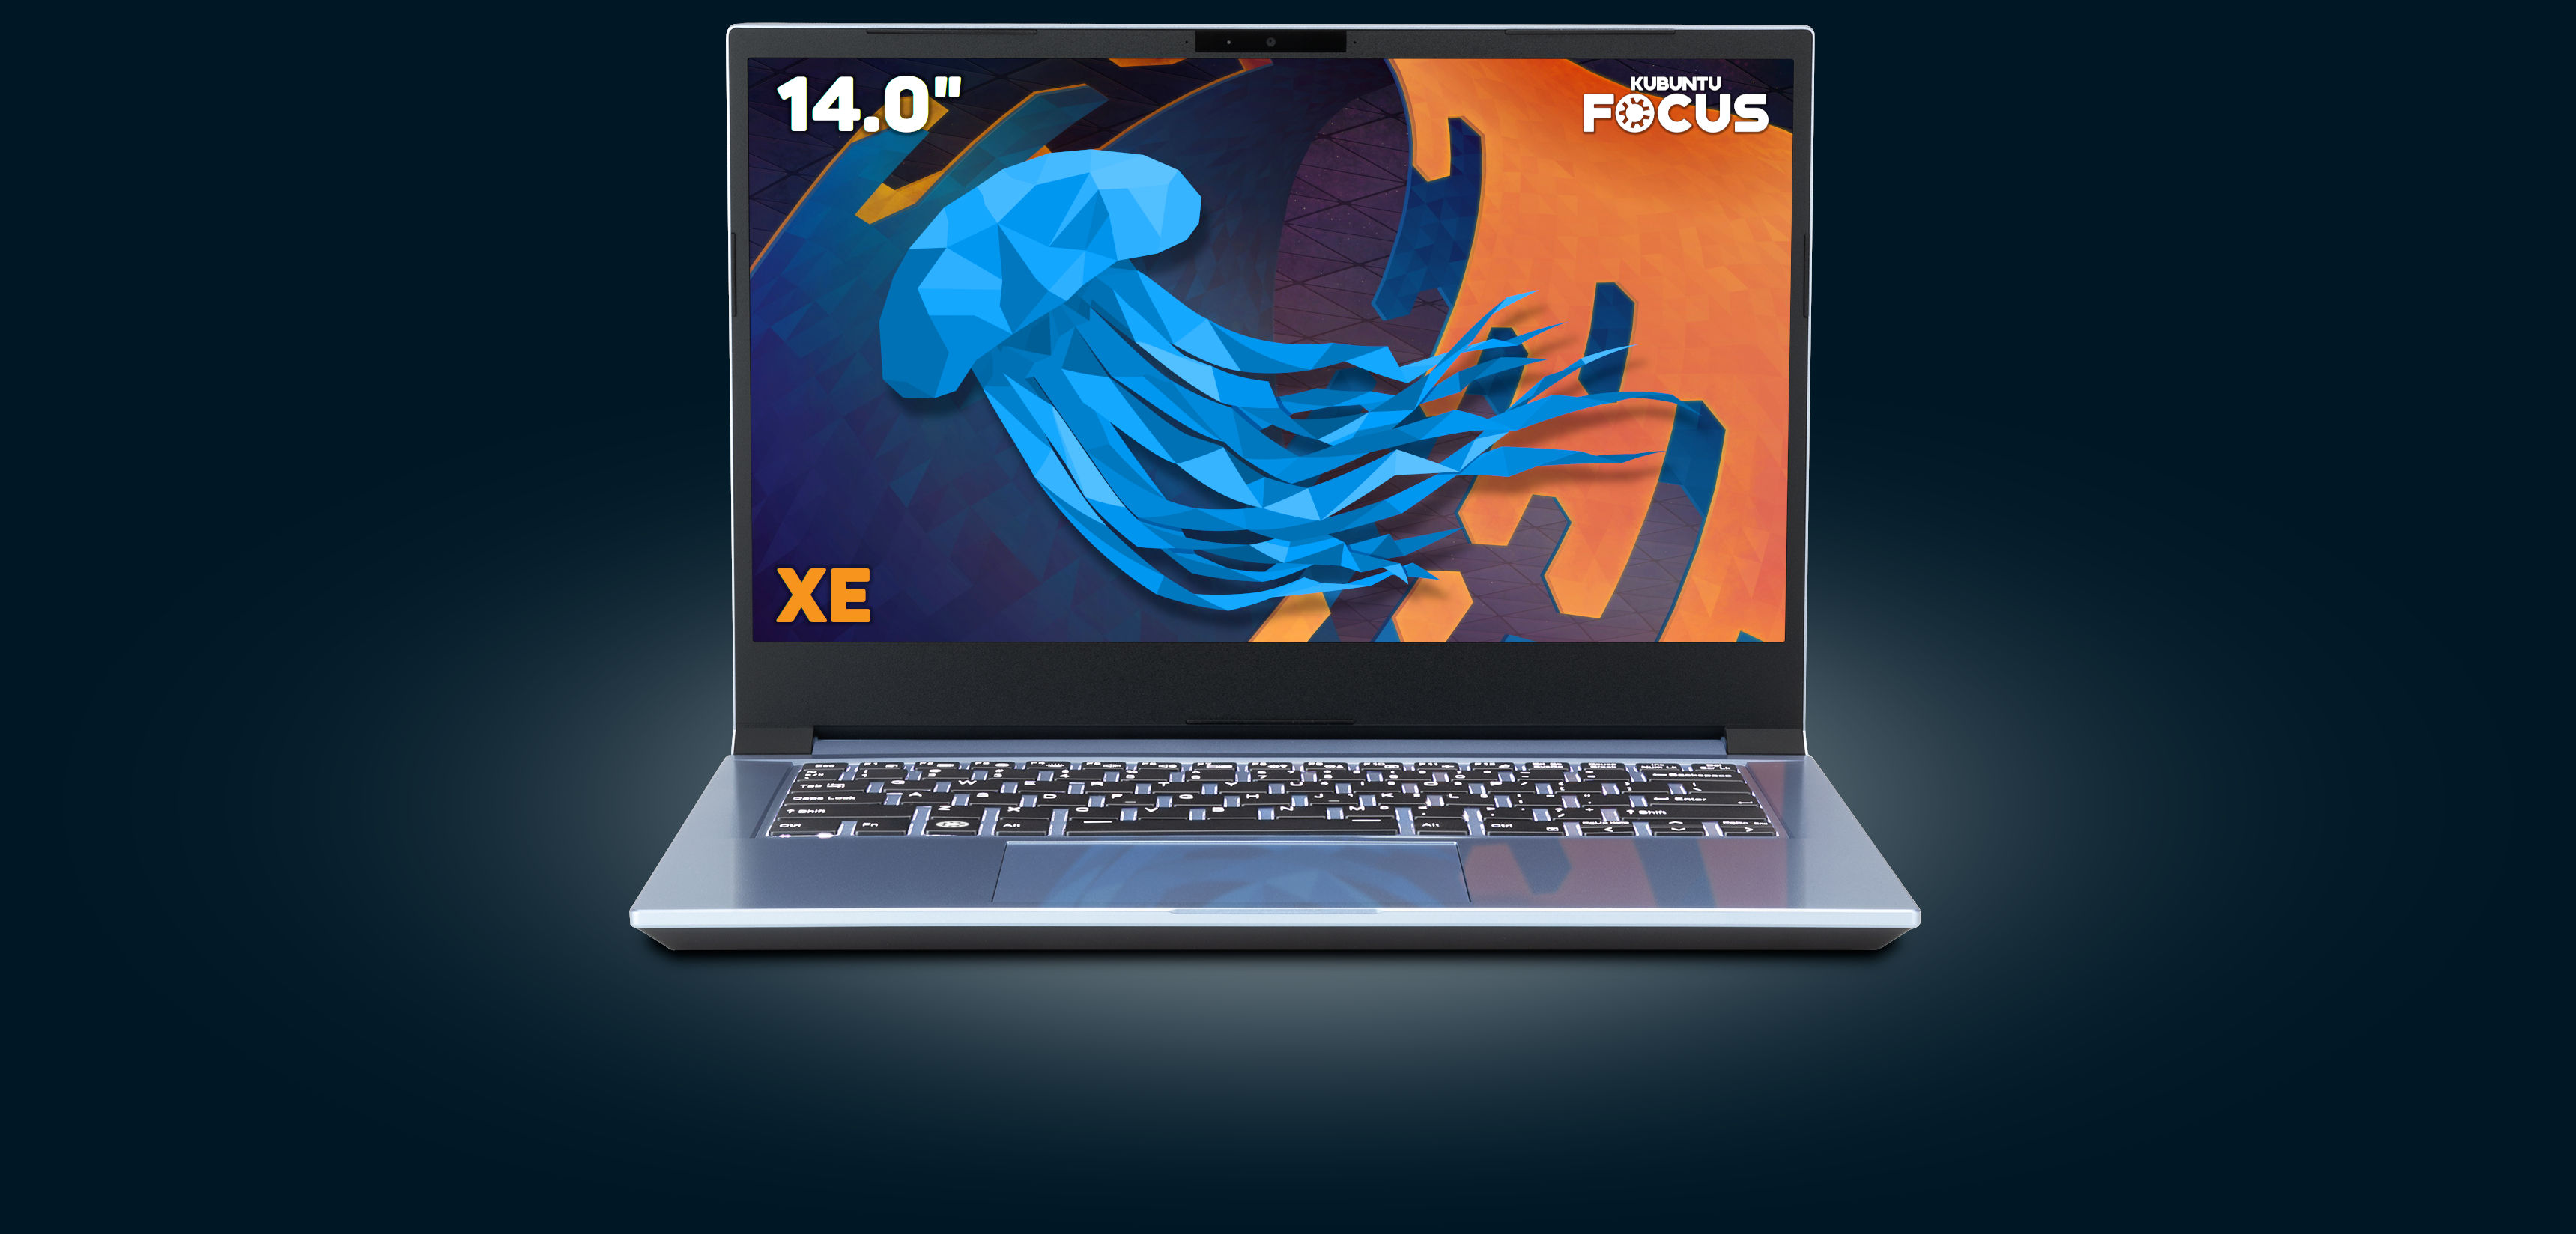 Kubuntu Focus XE Now Available